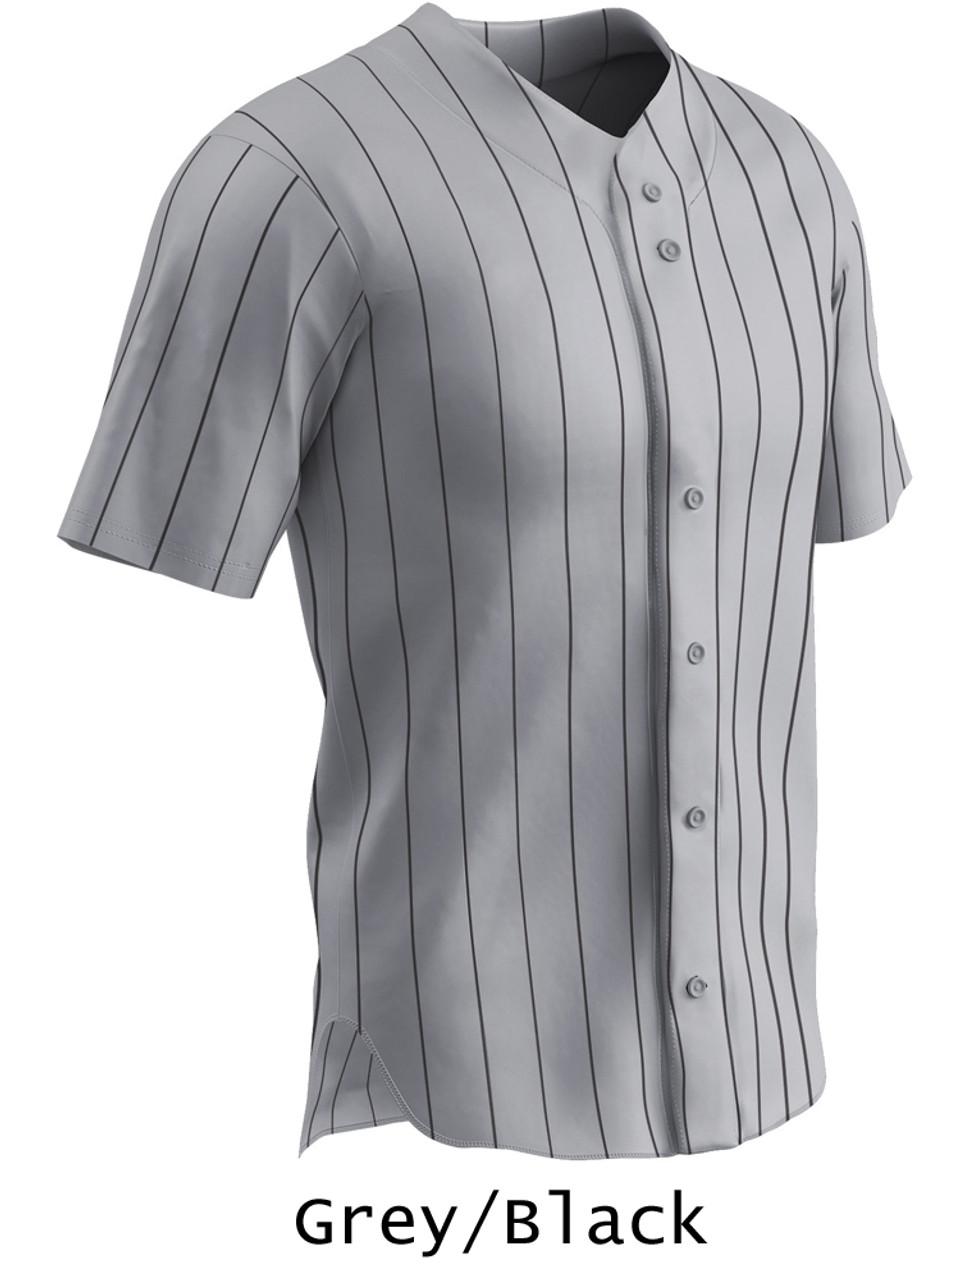 Adult/Youth Yankee Pinstripe Button Front Baseball Uniform Set - All  Sports Uniforms